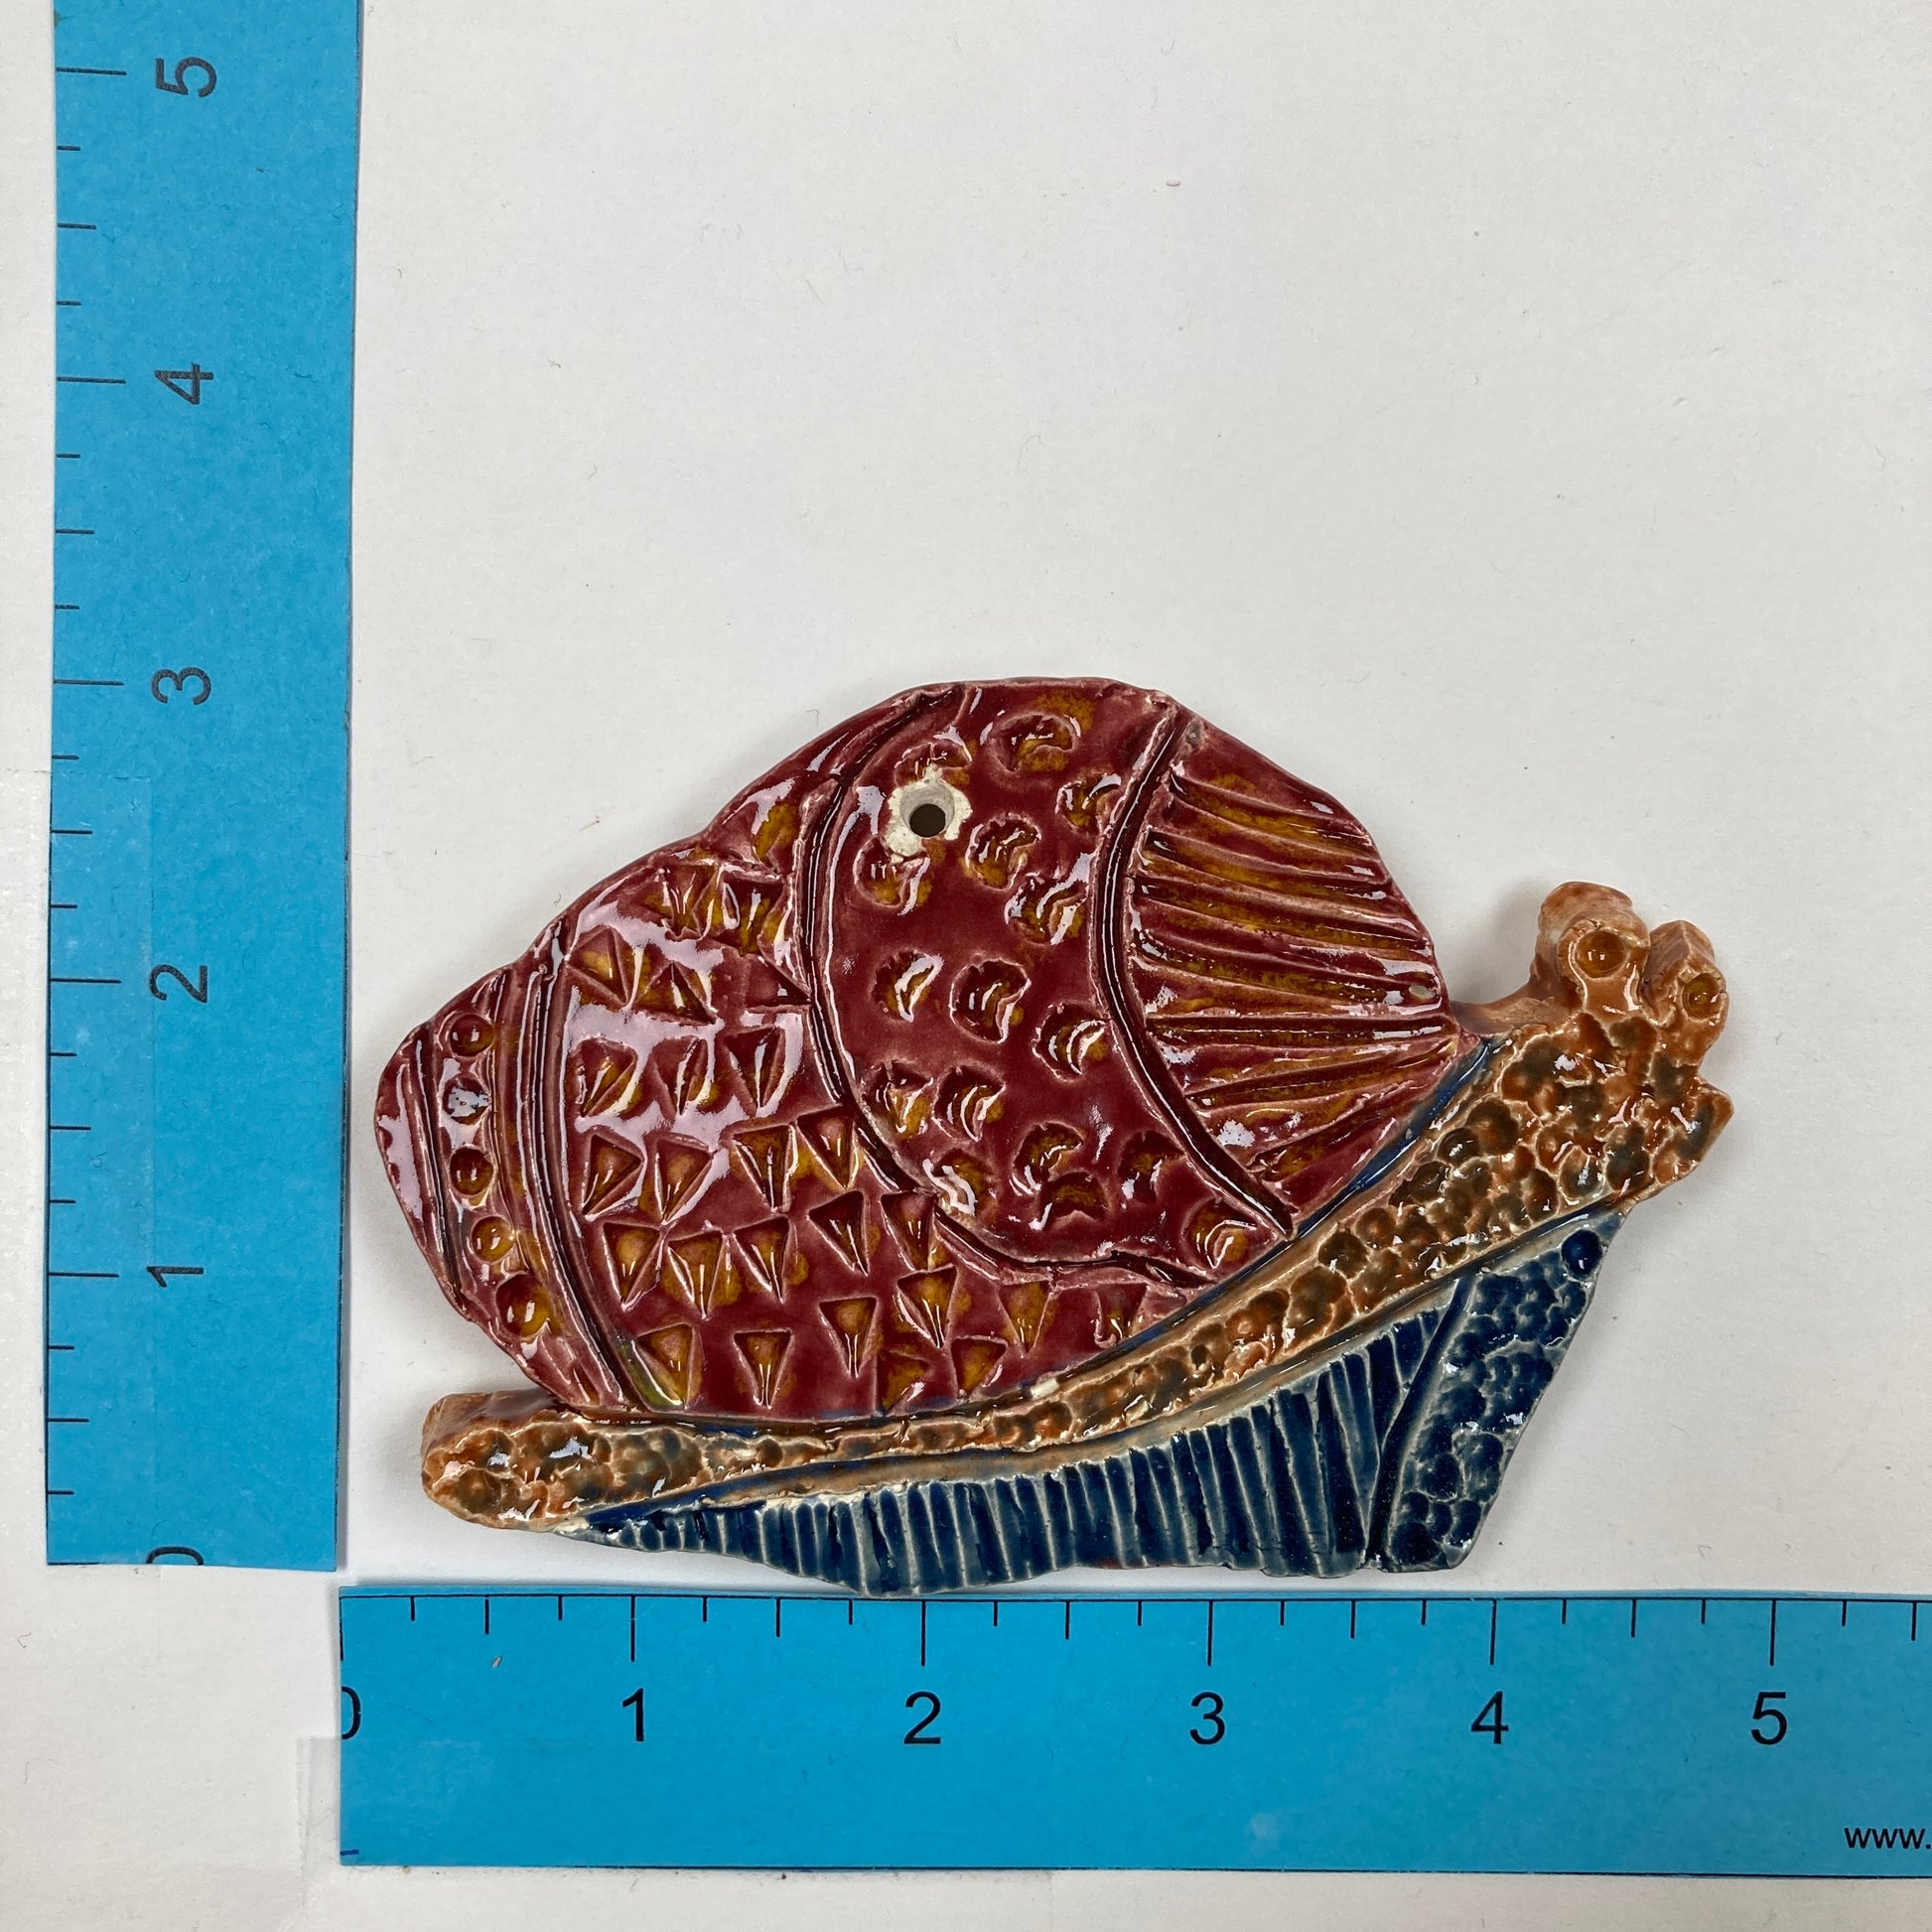 WATCH Resources Art Guild - Ceramic Arts Handmade Clay Crafts Fresh Fish 5-inch x 3-inch Glazed Crab by Loreen Bartschi